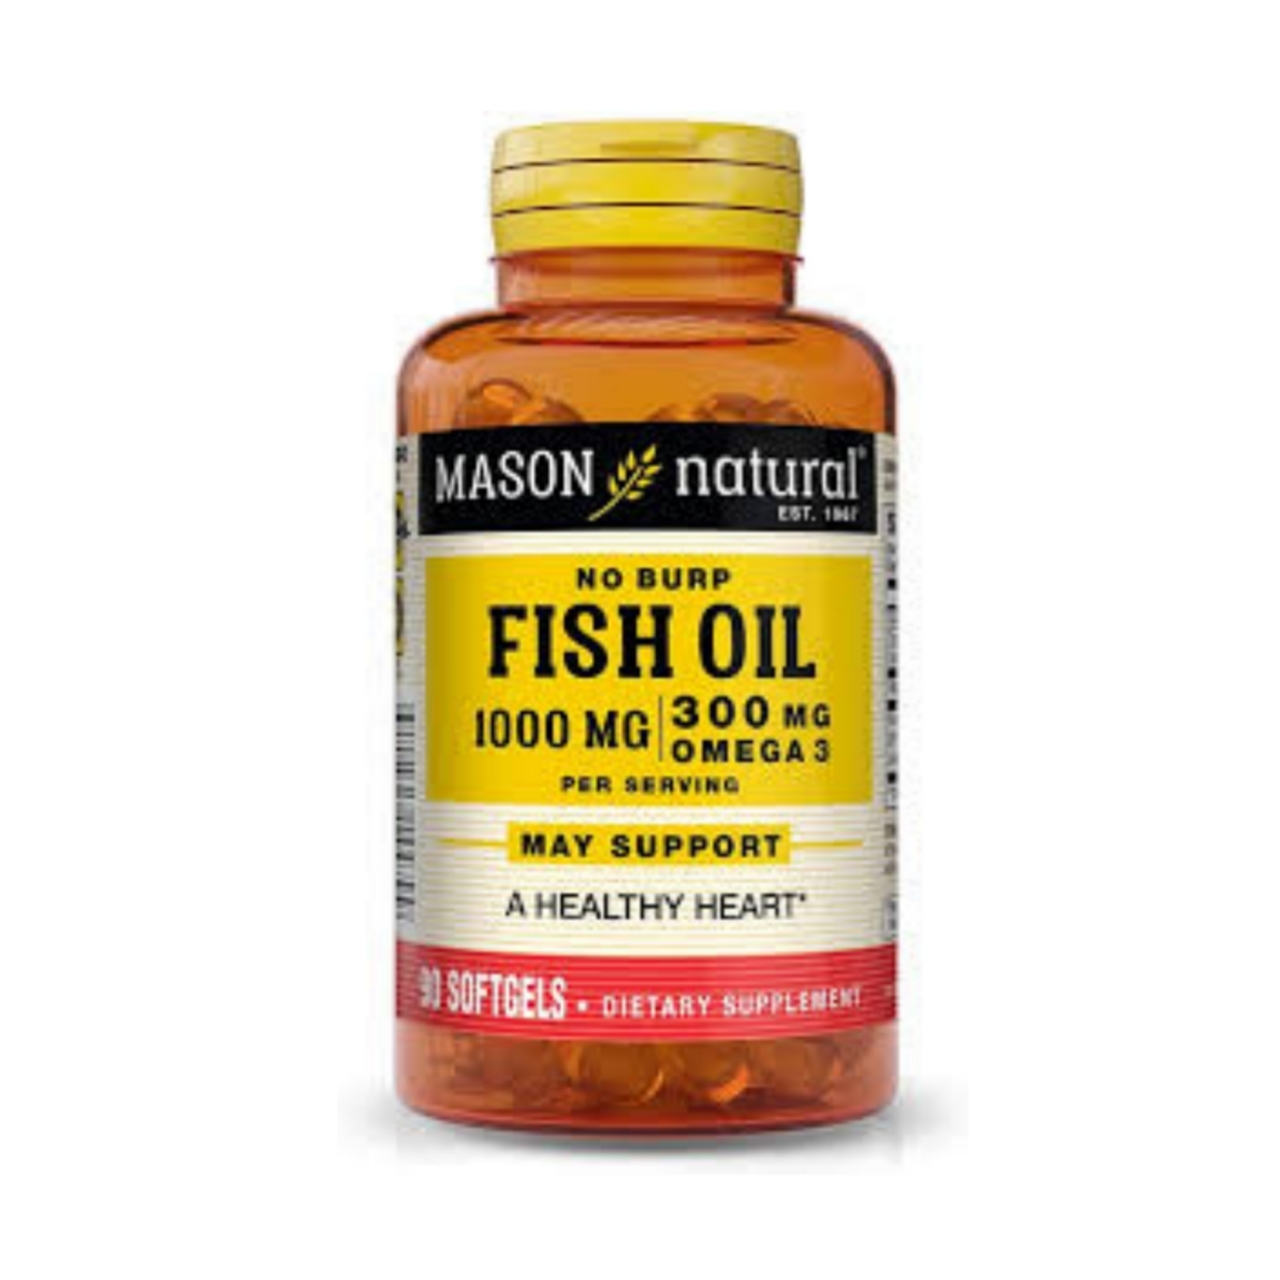 Fish oil 1000mg +300mg omega-3